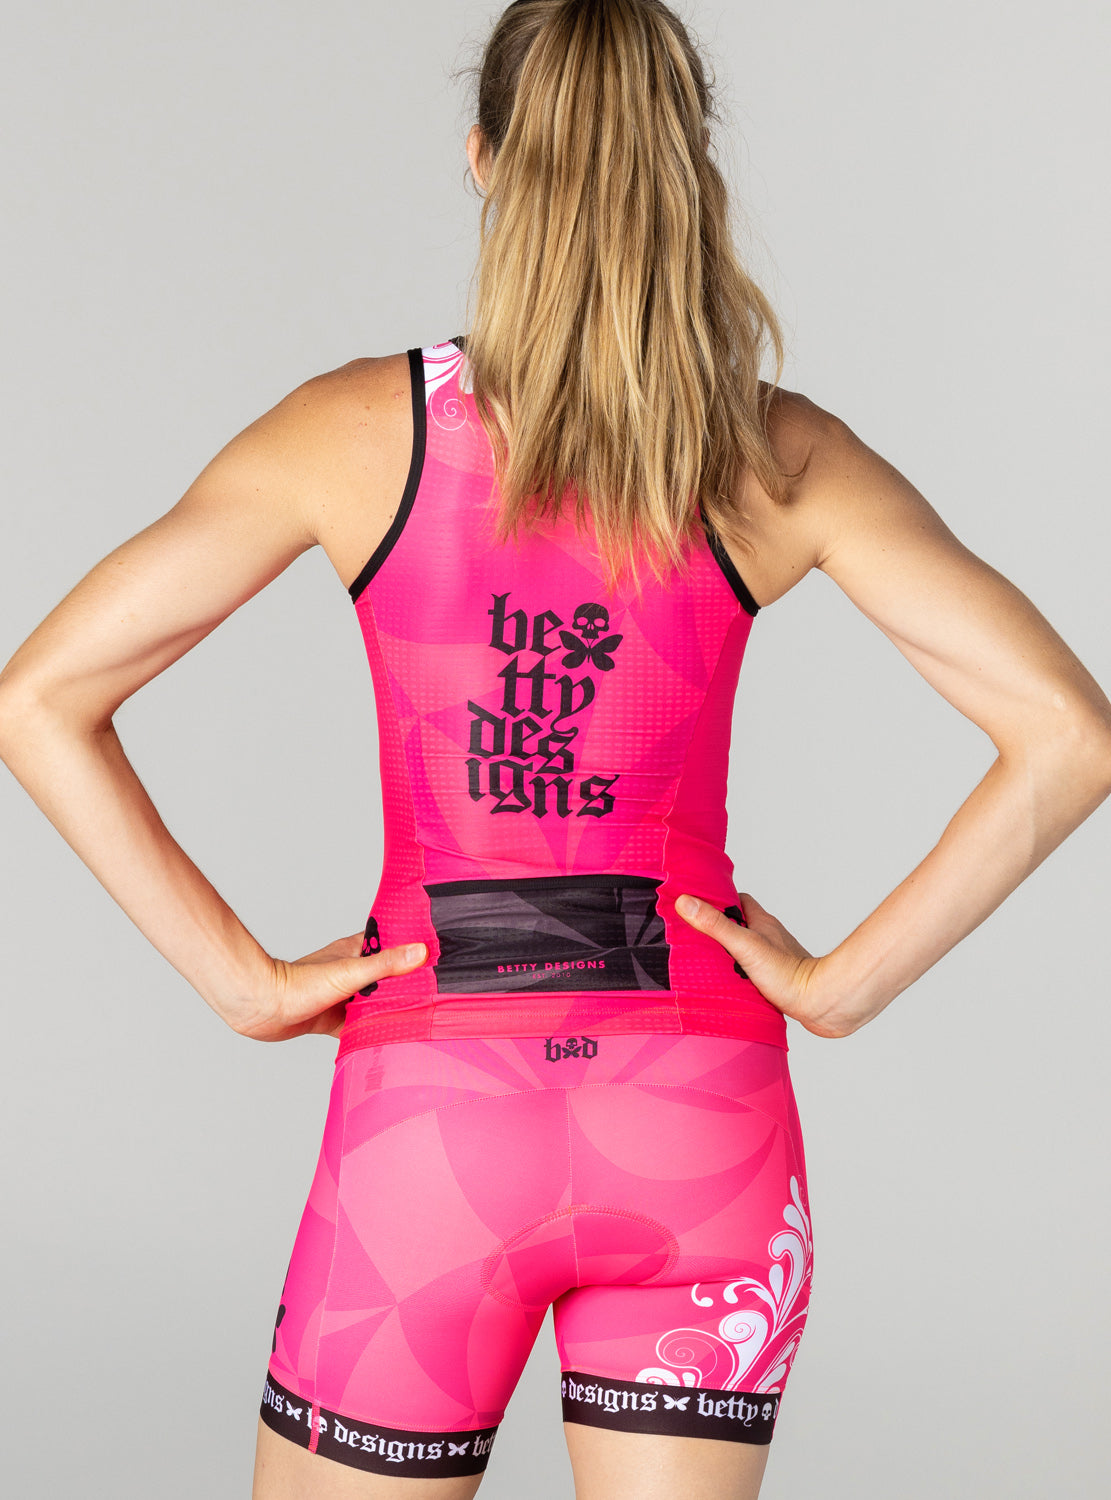 betty designs pink signature sleeveless triathlon top for women